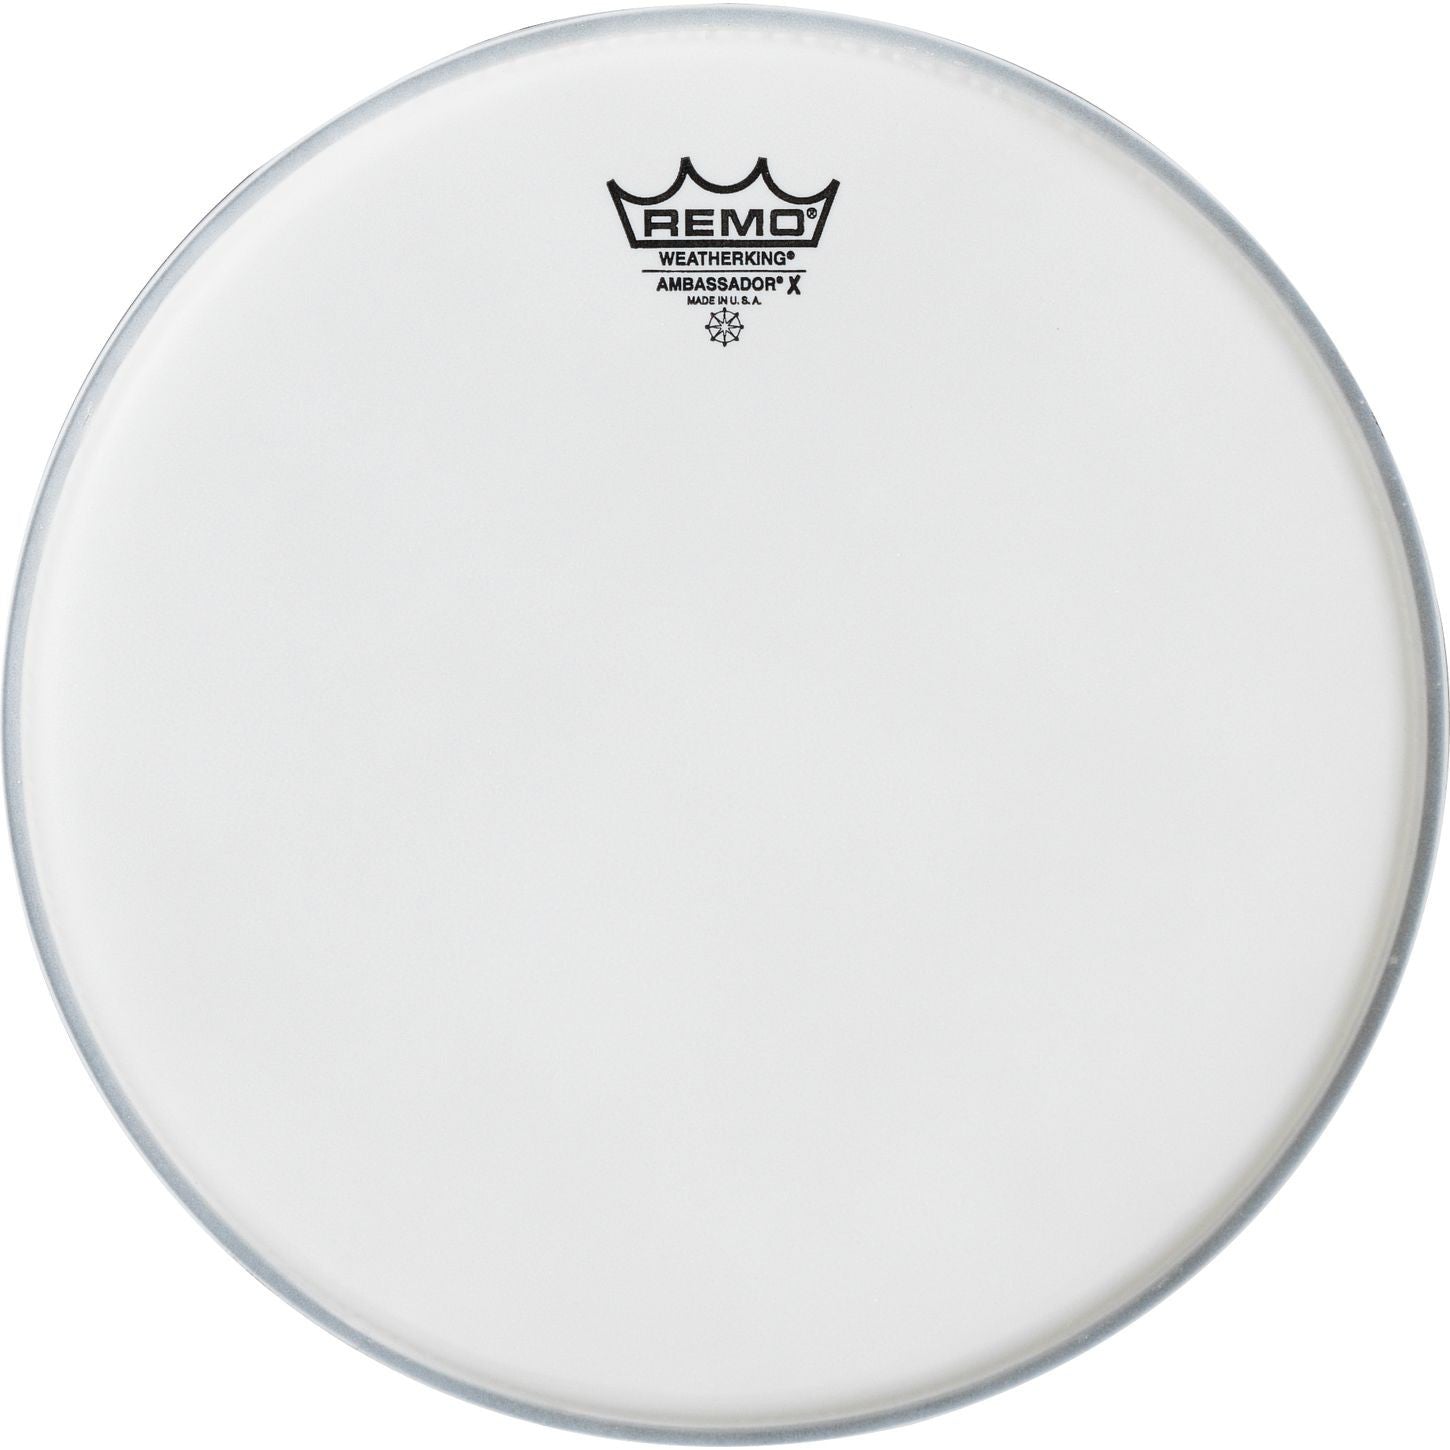 REMO | Ambassador 14" inch Coated Drum Head | Drum Skin | BA-0114-00